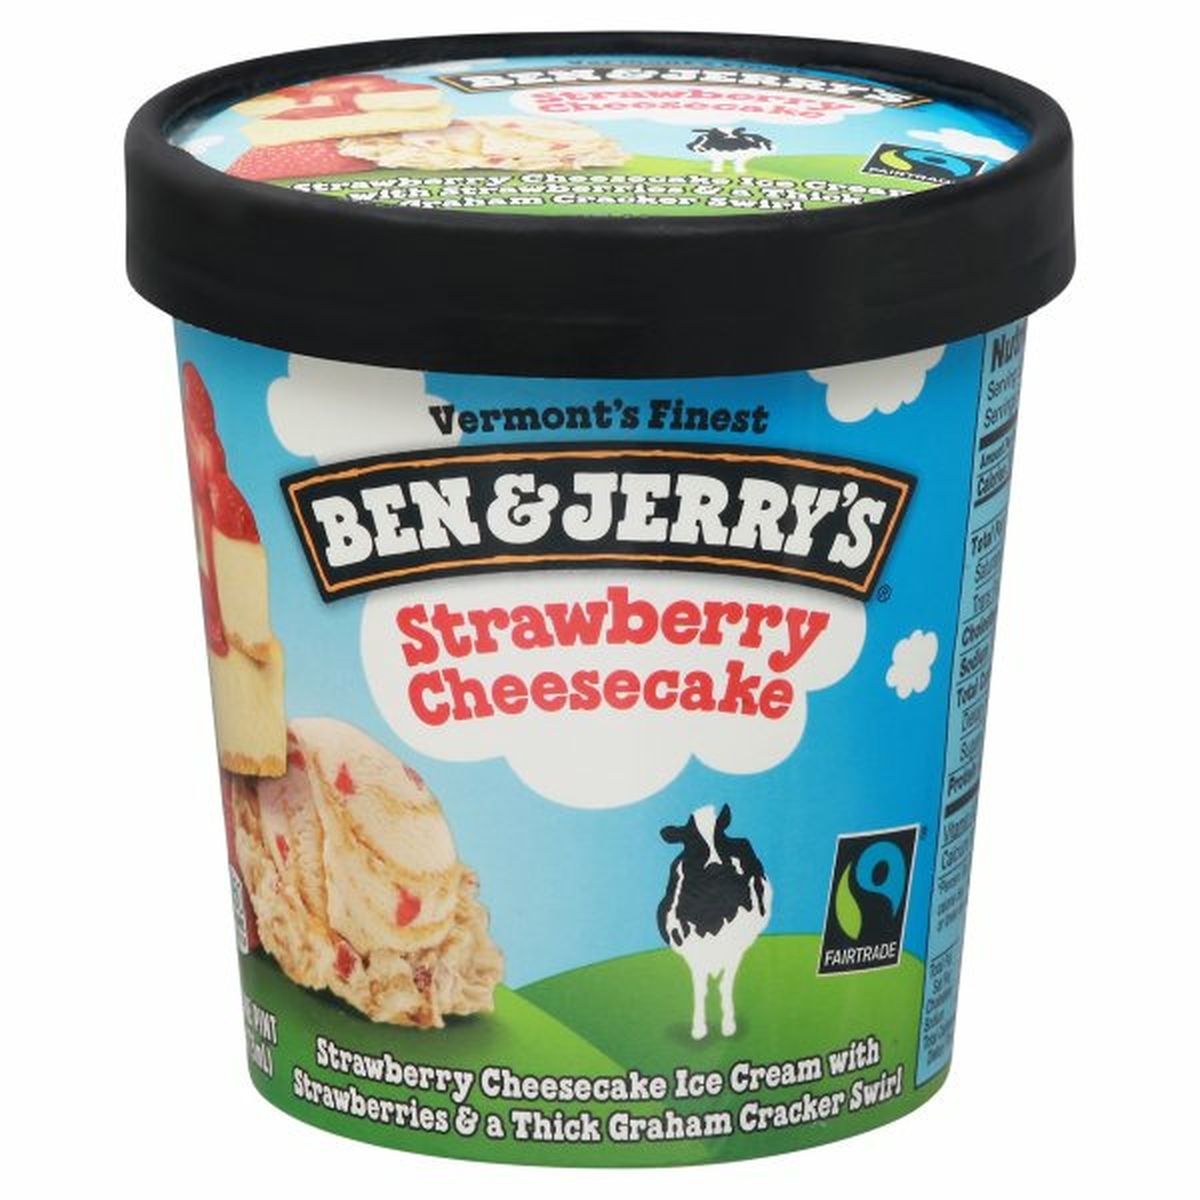 Calories in Ben & Jerry's Ice Cream, Strawberry Cheesecake